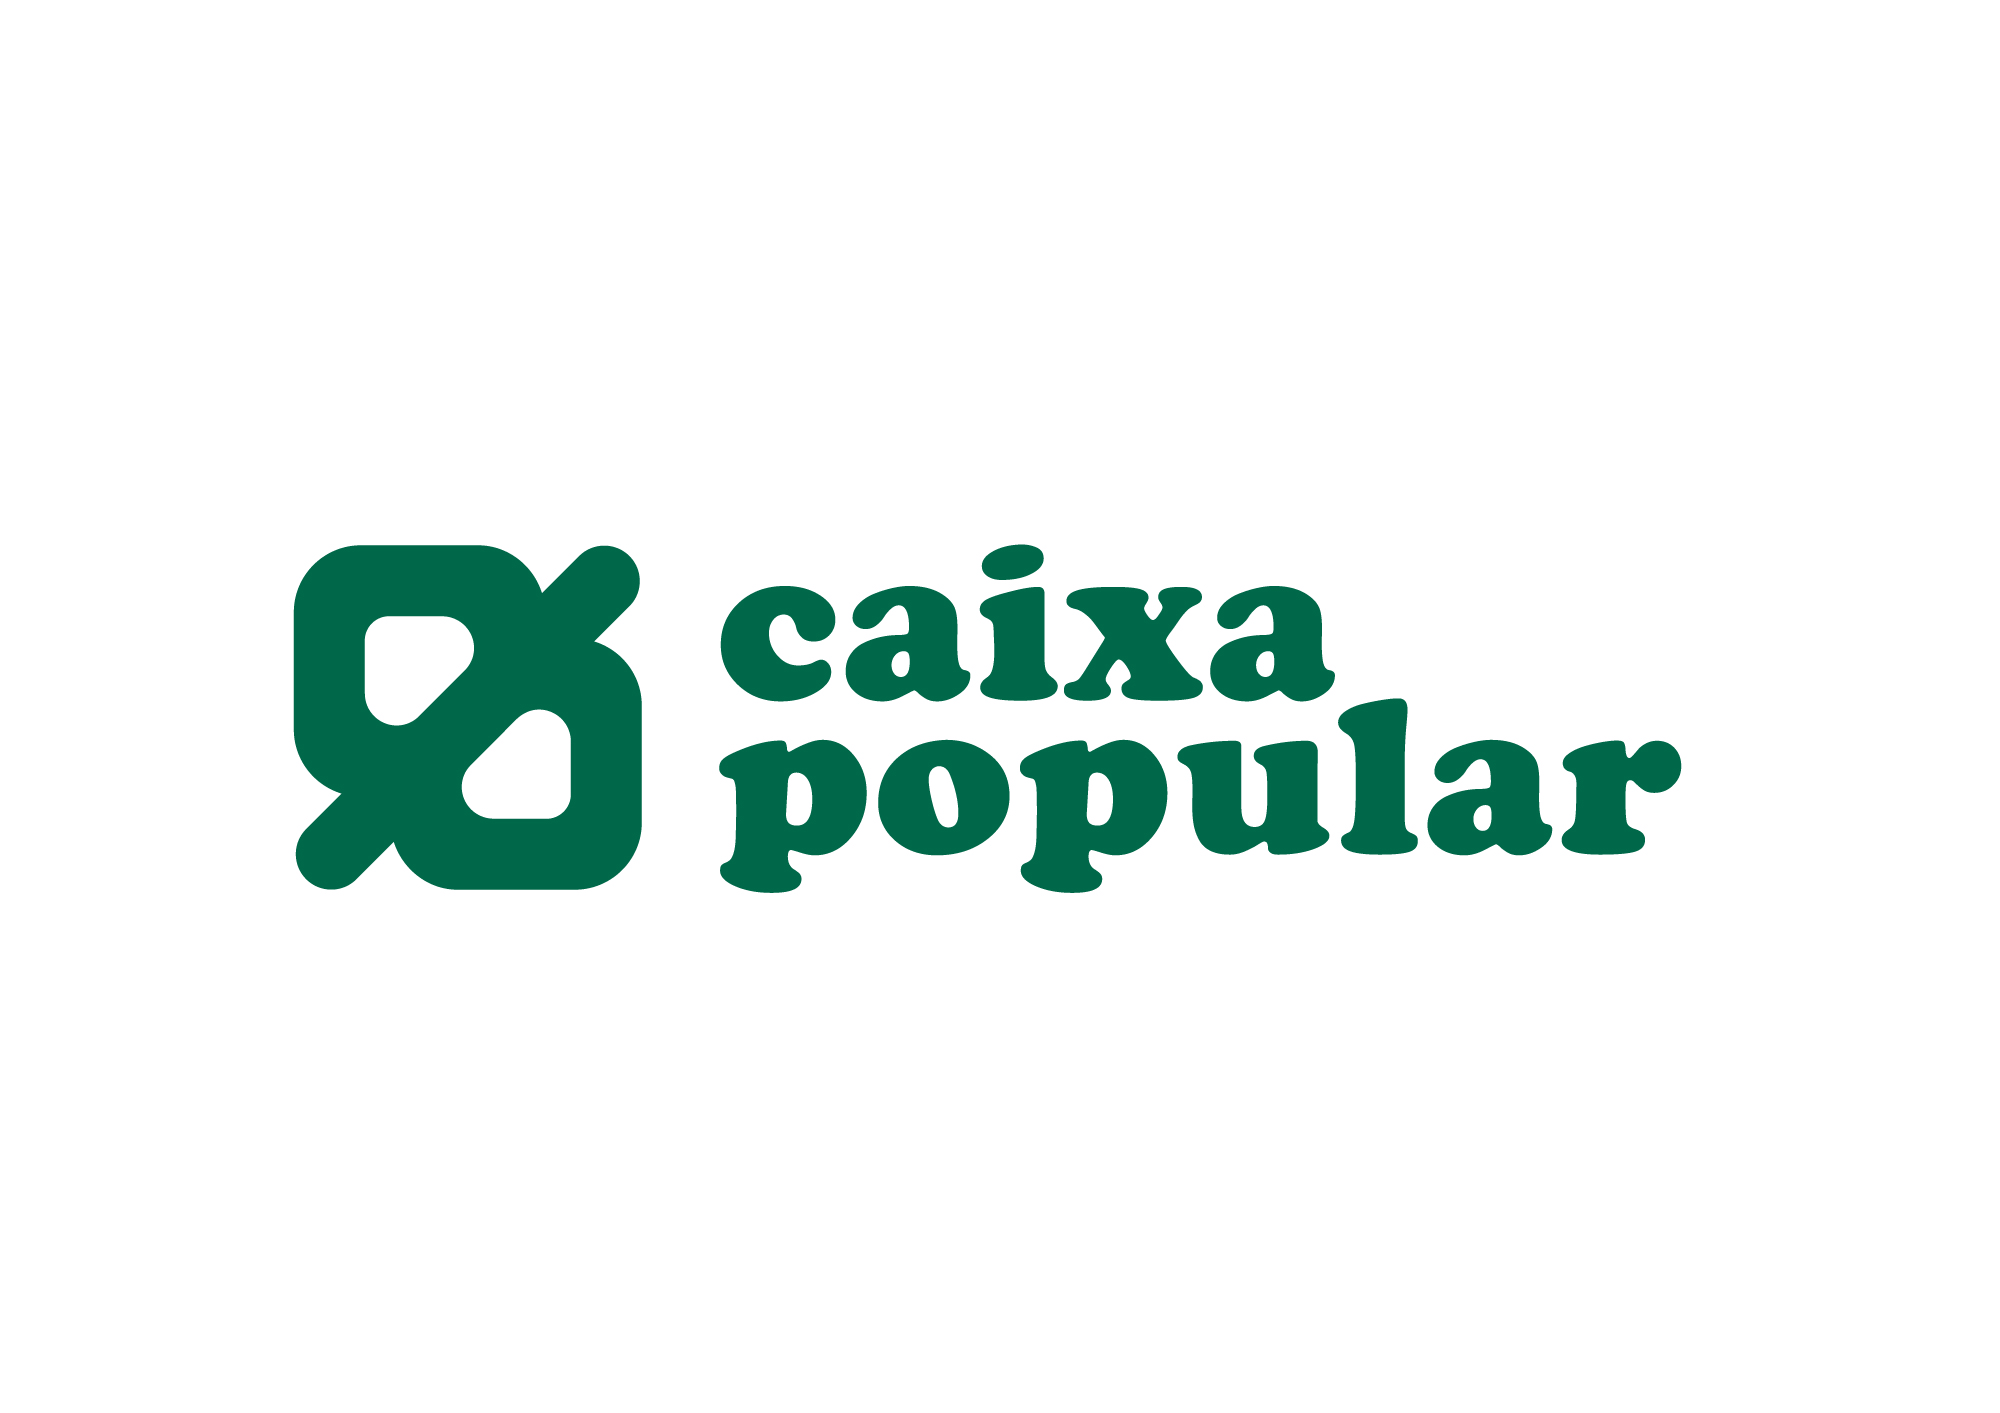 CAIXA POPULAR logo 1 - Caixa Popular